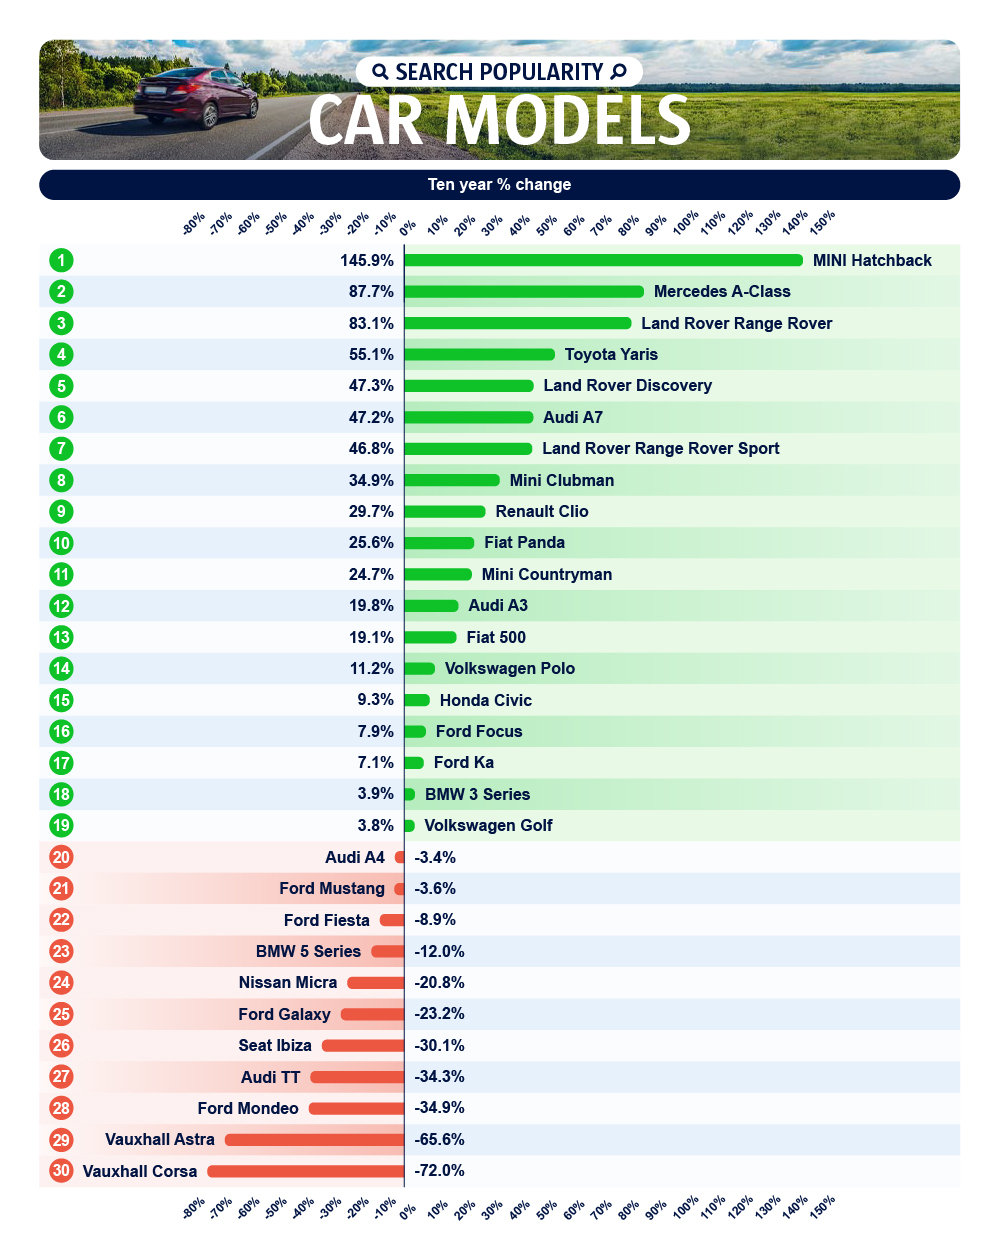 CompareTheMarket car models popularity ranking